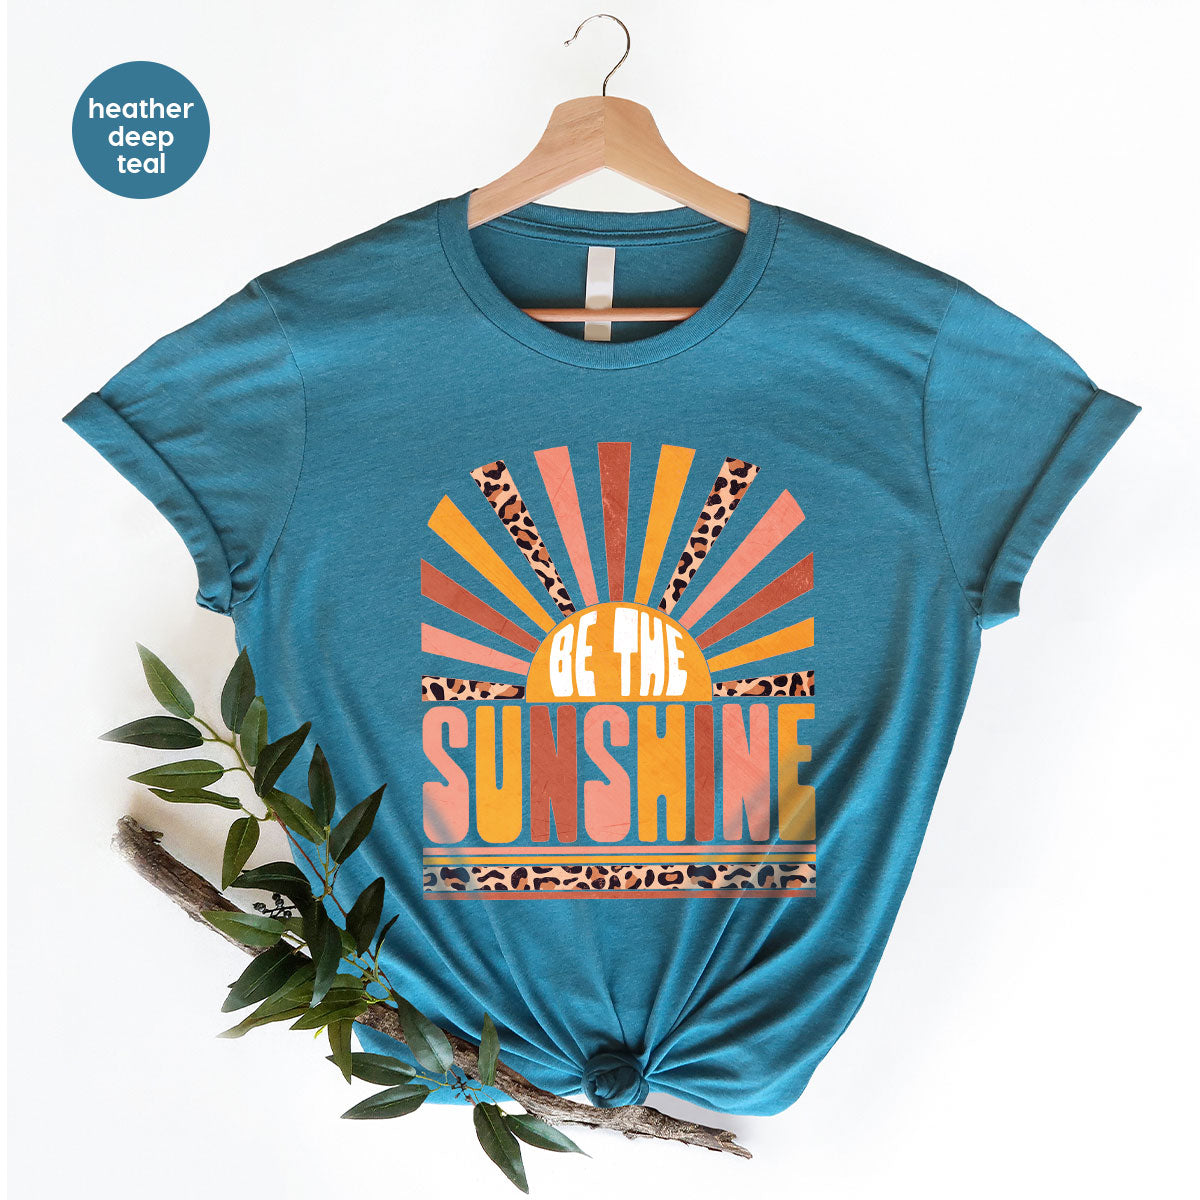 Get The Sunshine Shirt